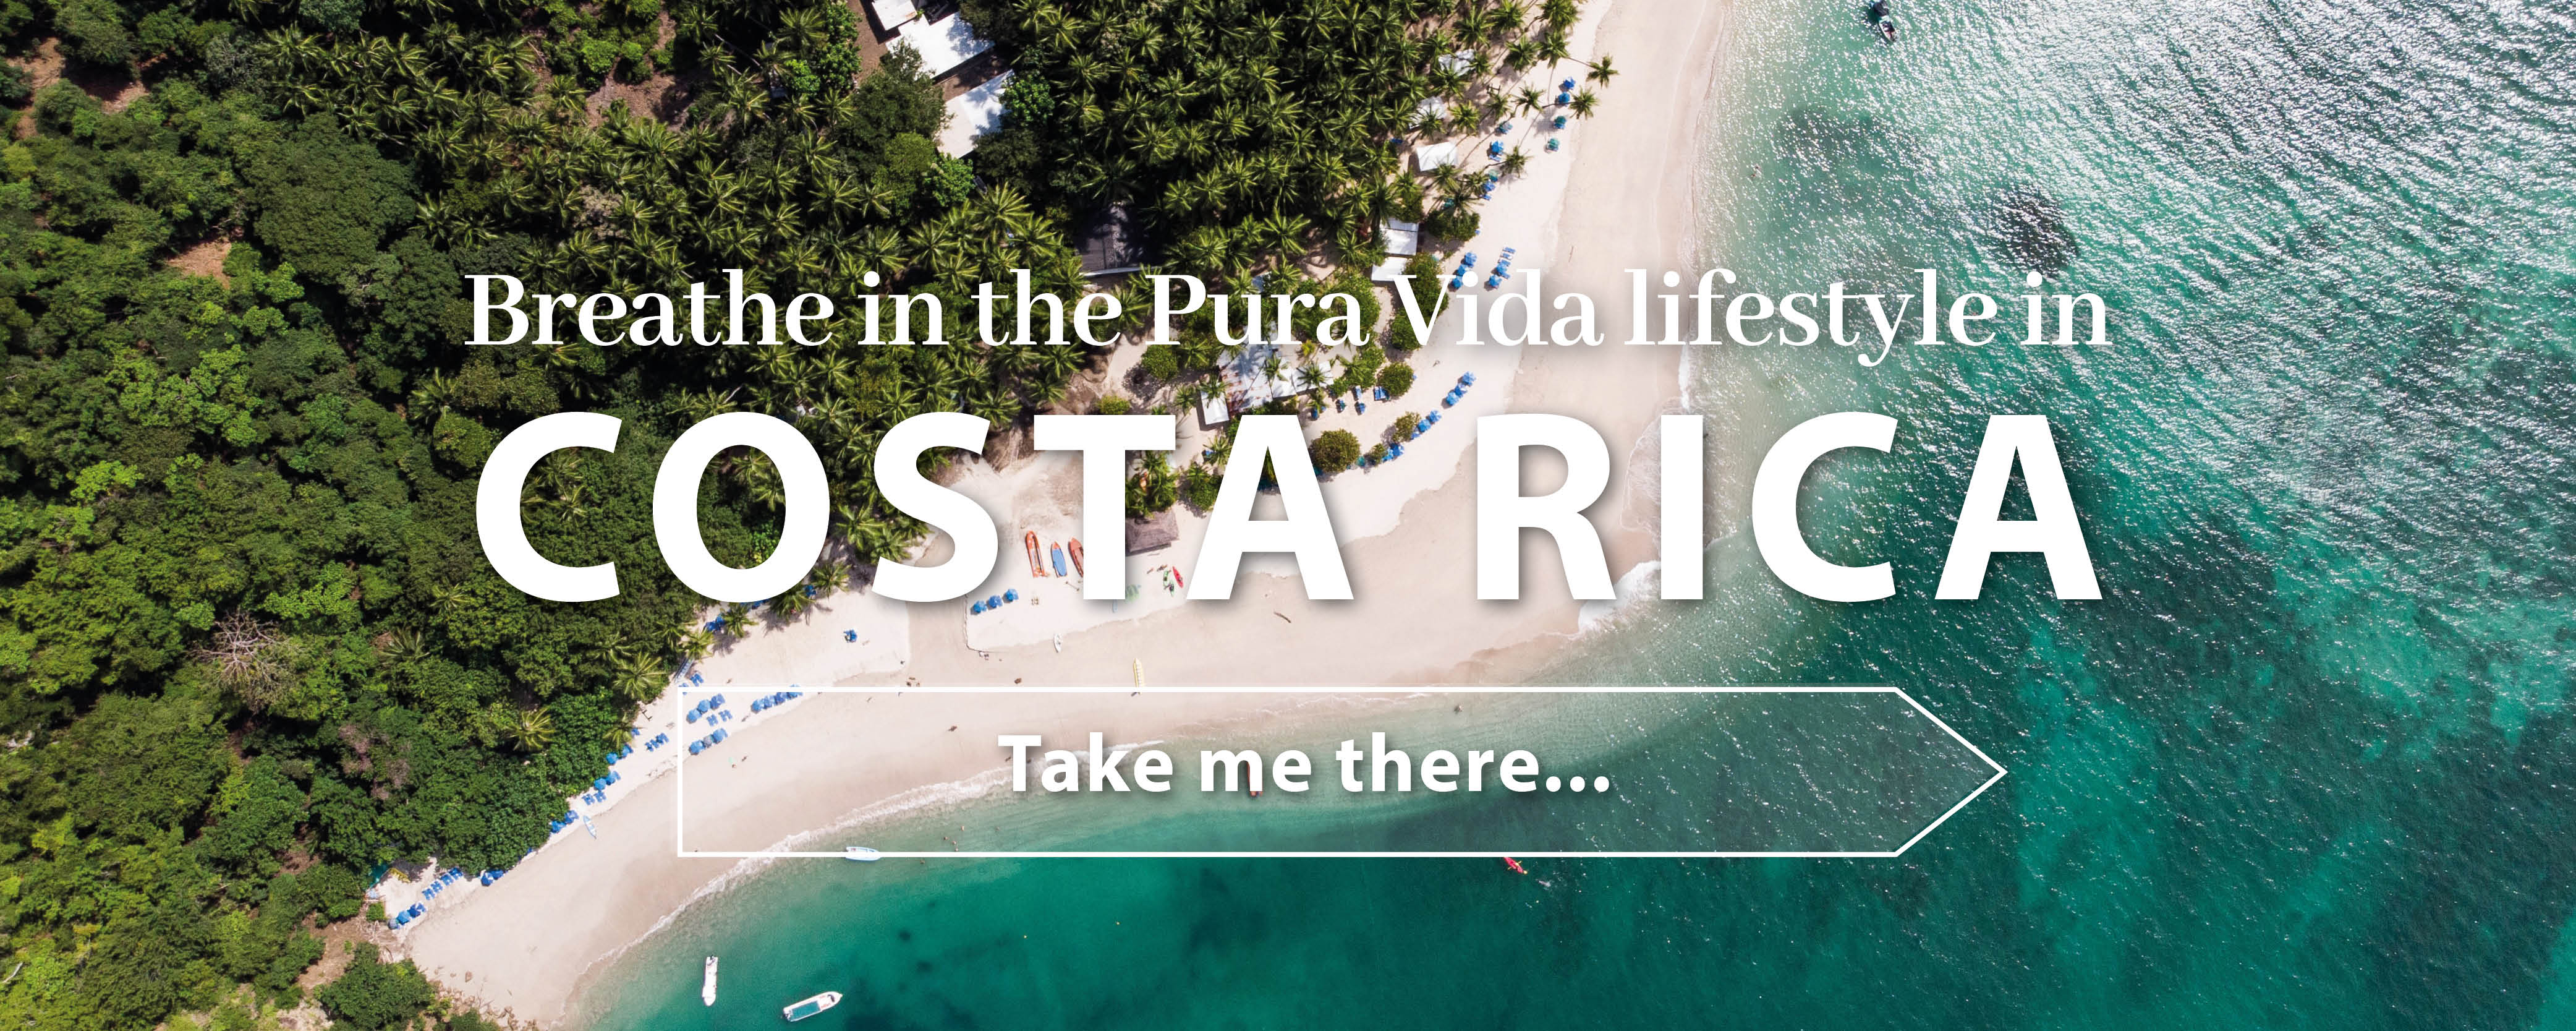 test free travel destinations Costa Rica